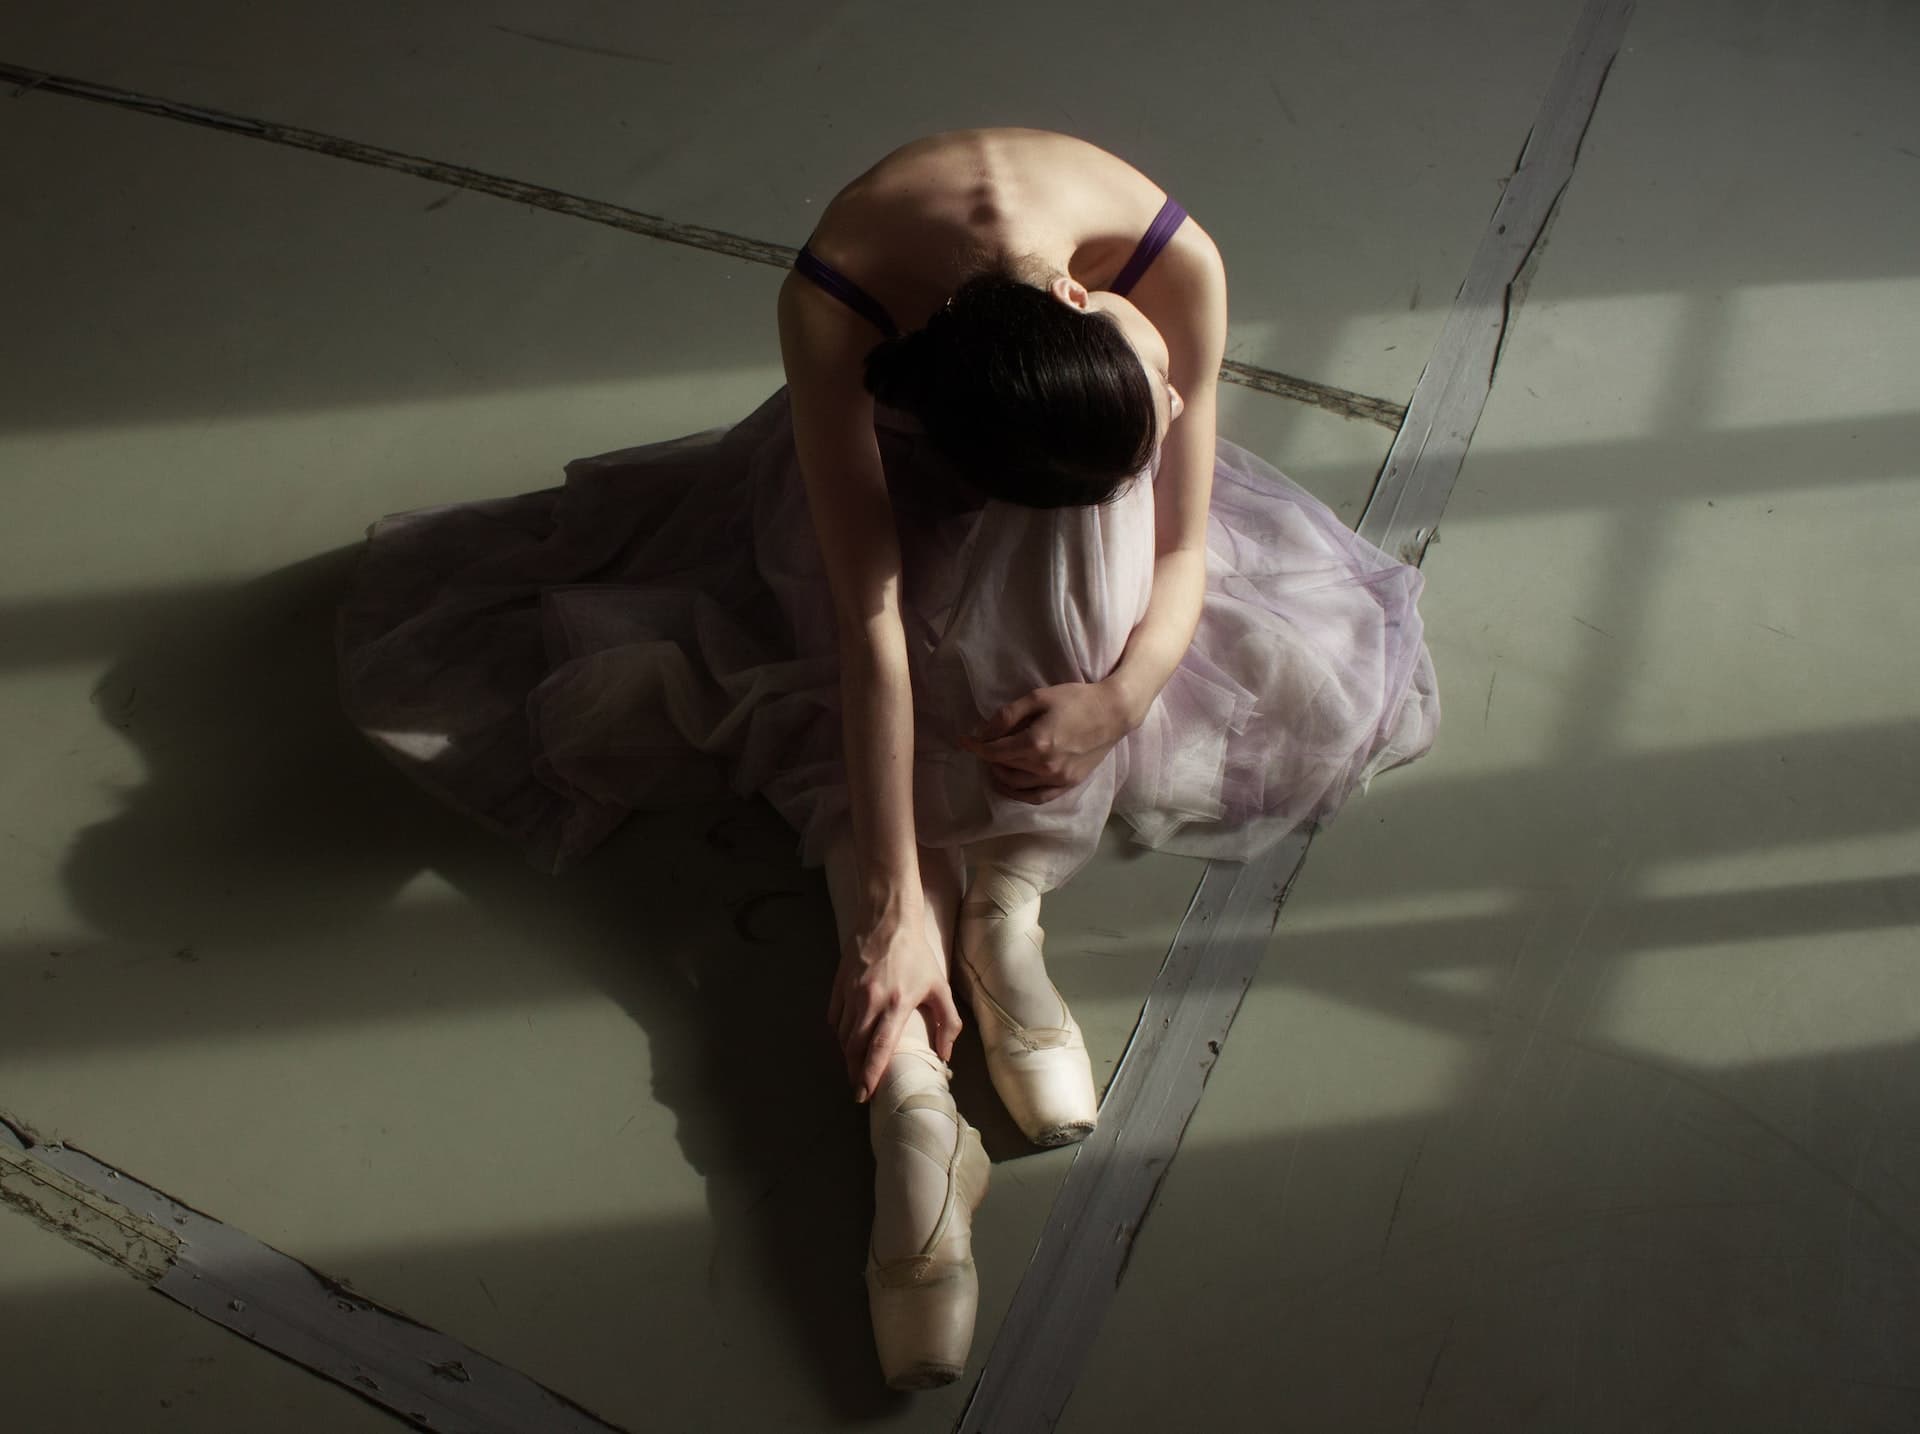 A young female ballet dancer stretches her leg at a ballet dance studio in Dublin, Ireland